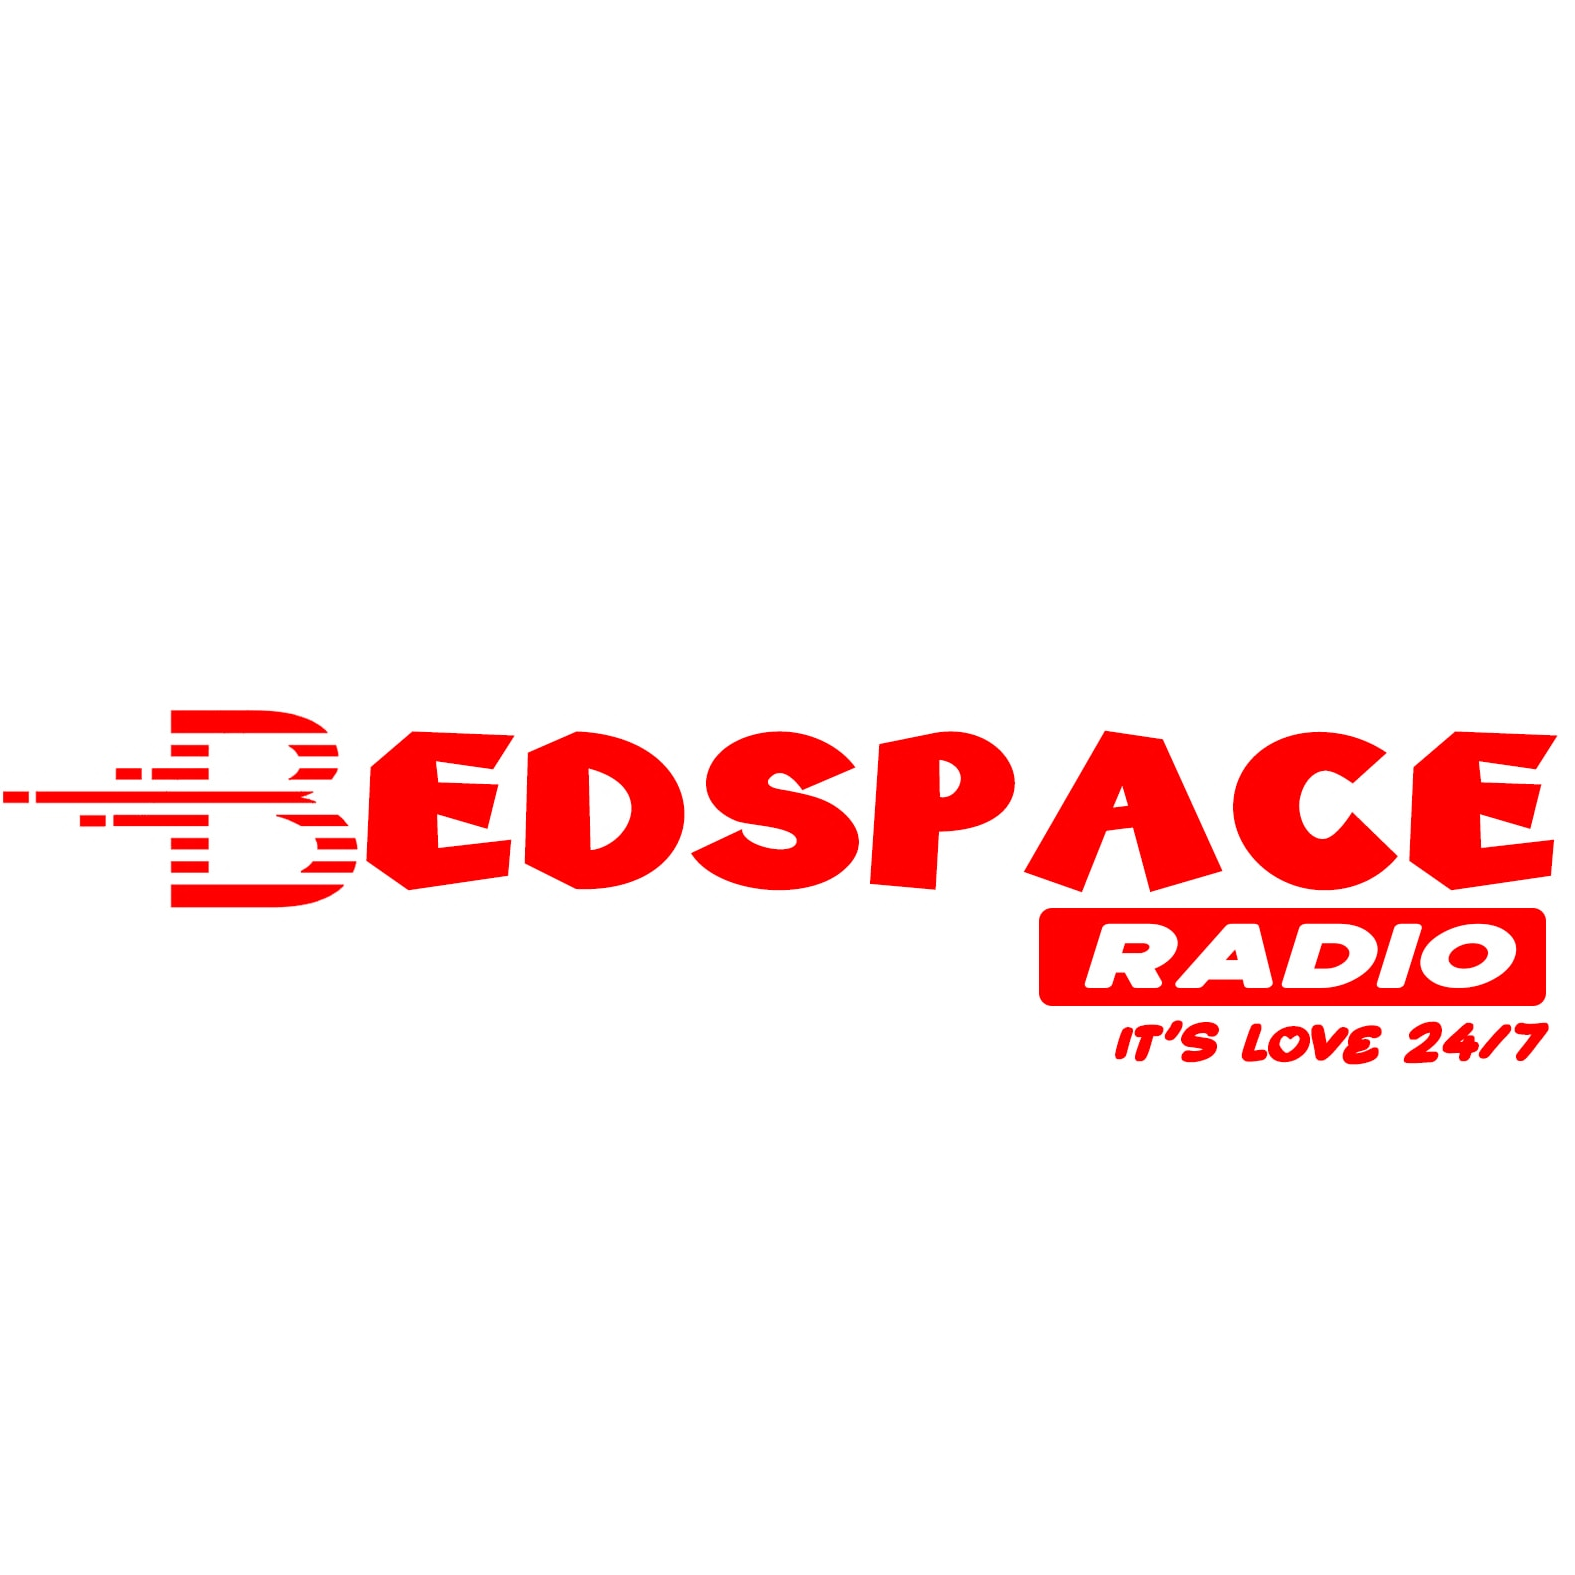 BedSpace Radio